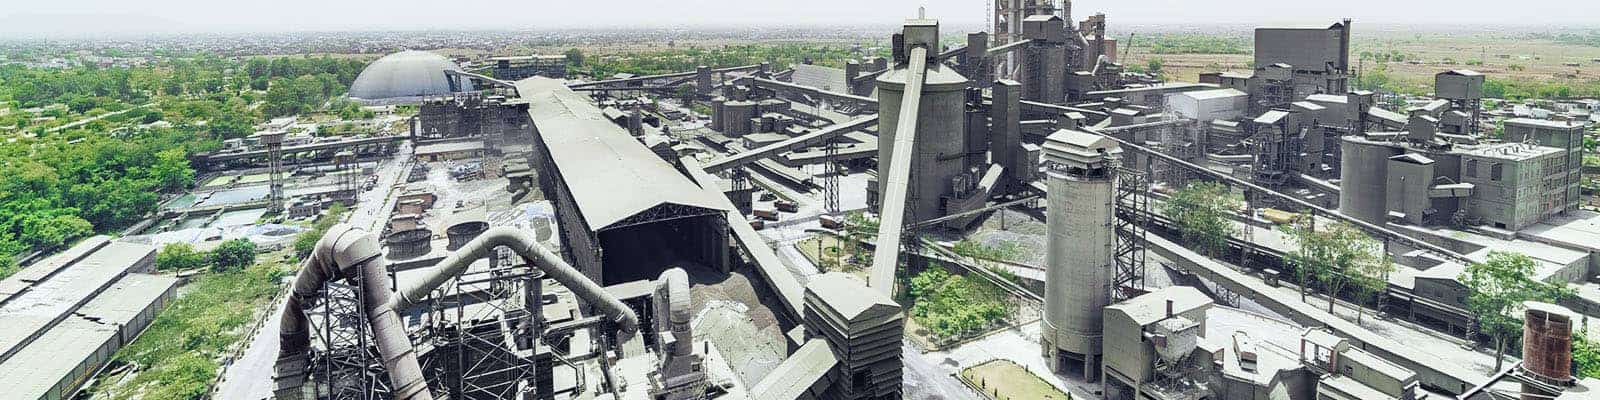 Birla Corporation Limited plant in dark gray